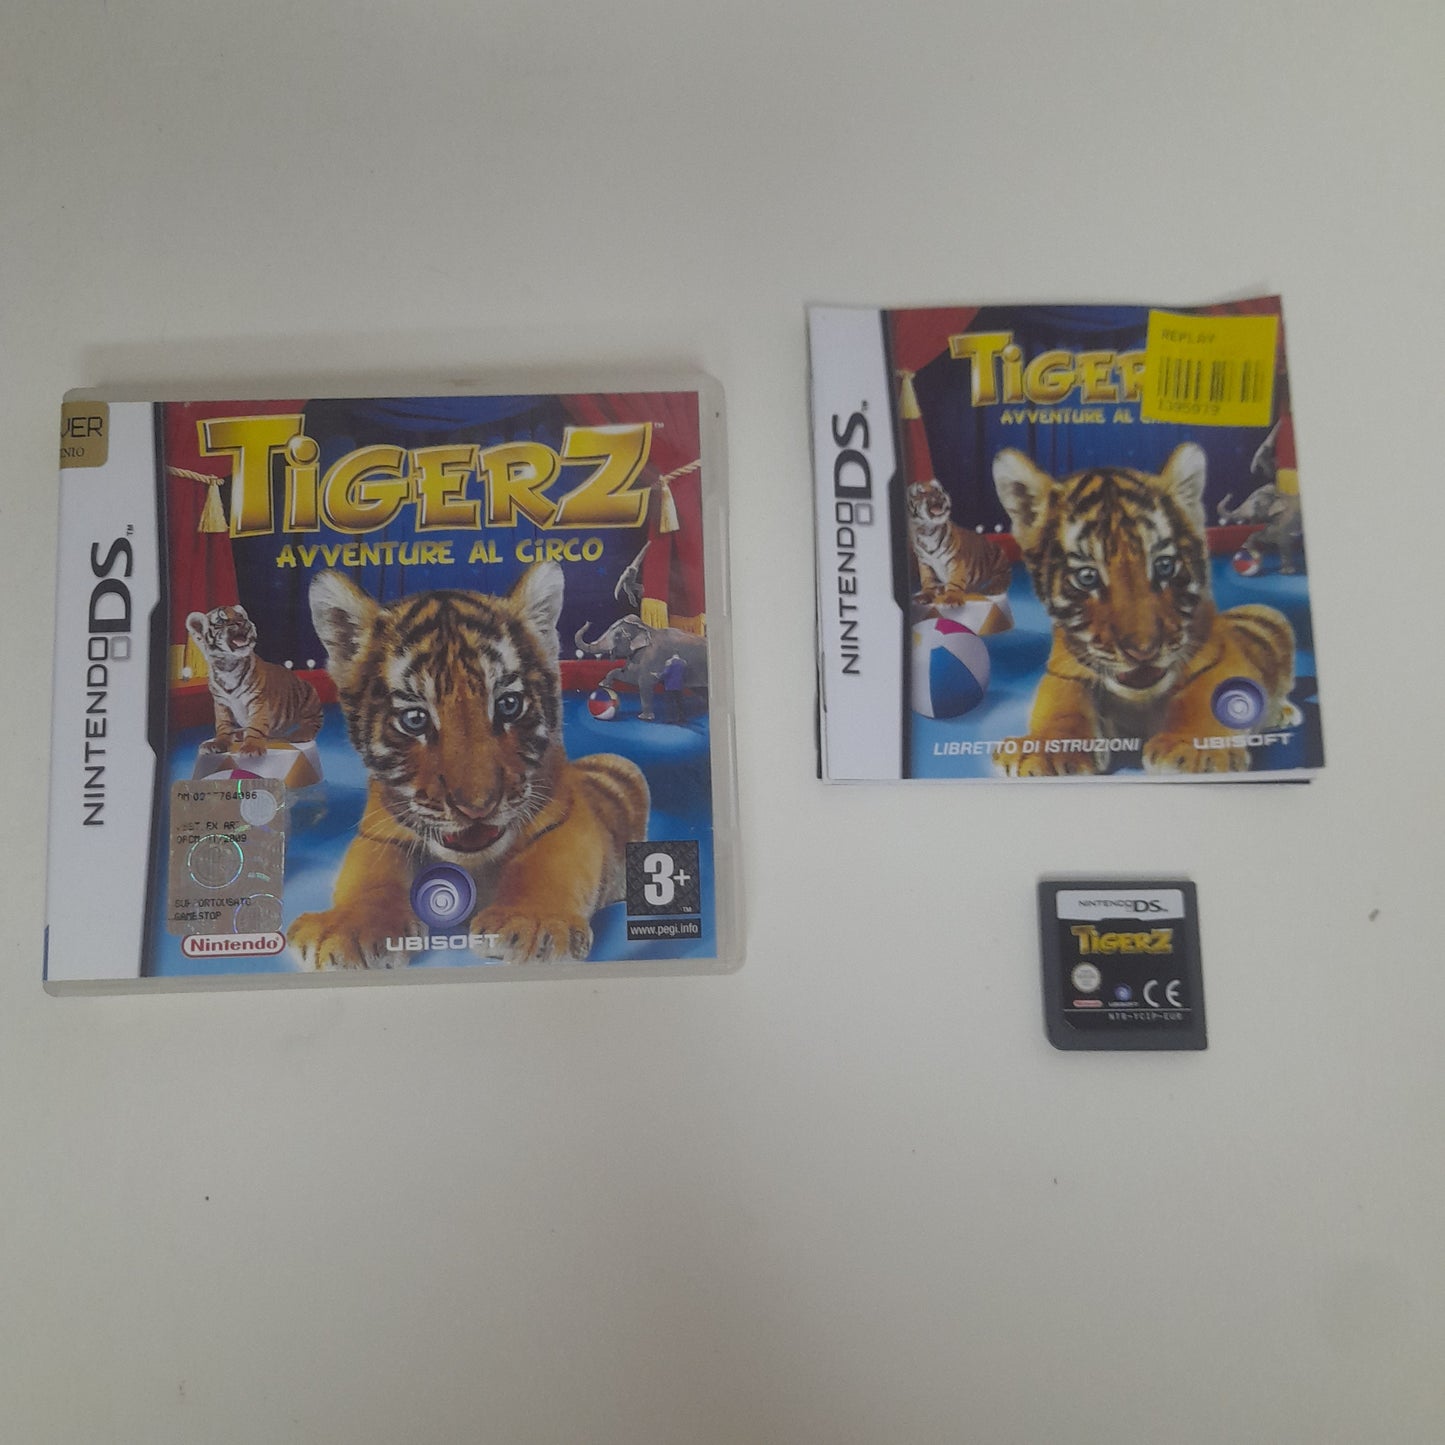 Tigerz - Avventure Al Circo - Nintendo DS